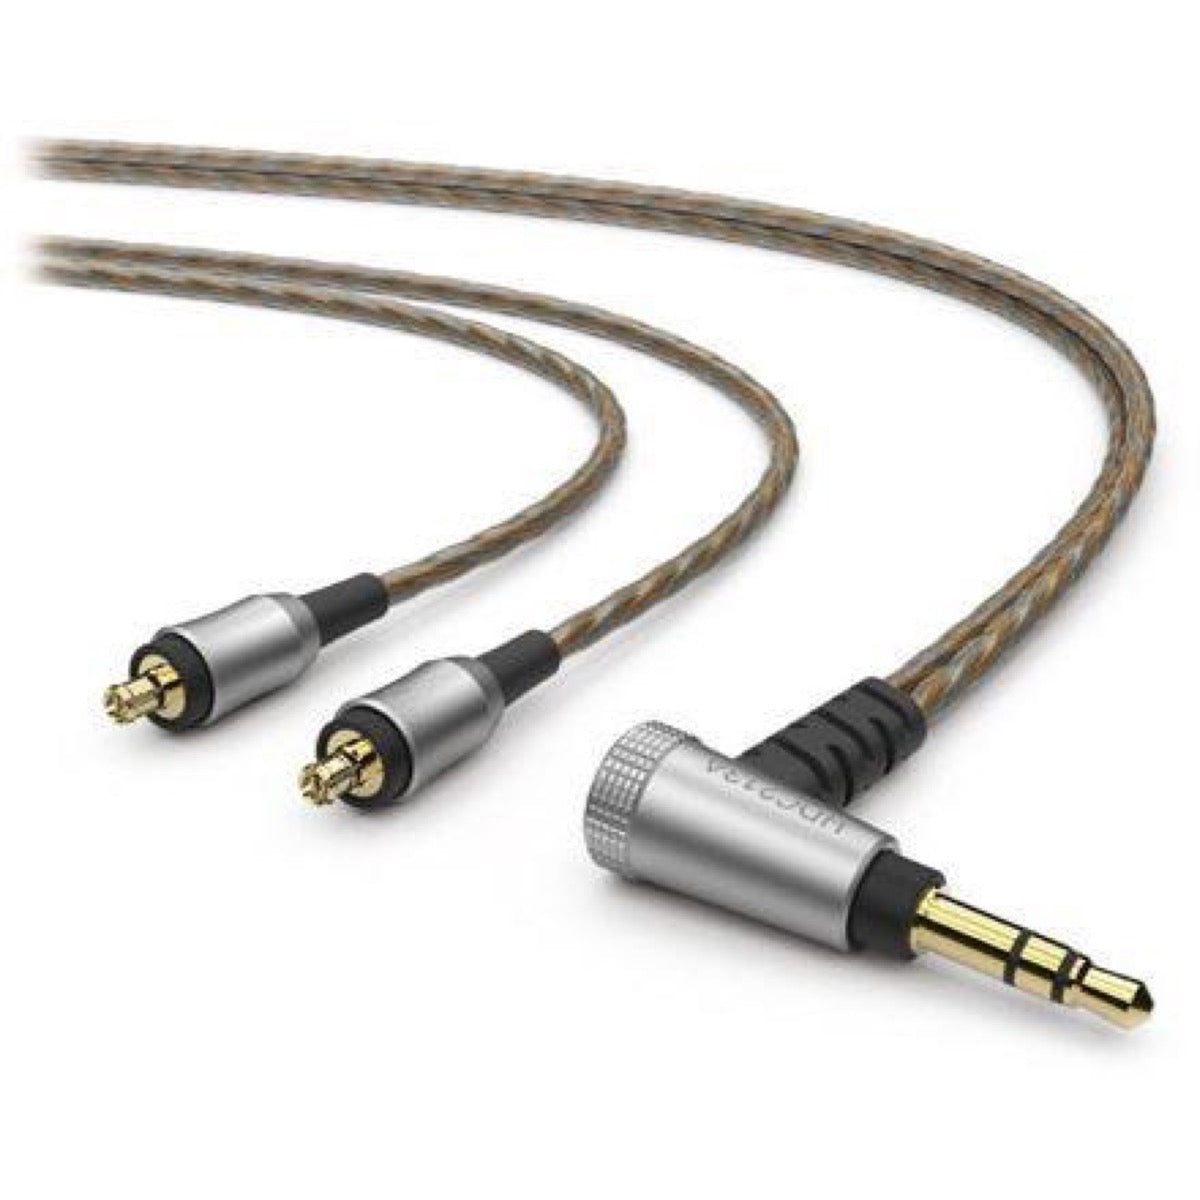 Audio-Technica HDC213A/1.2 Detachable Headphone Cable